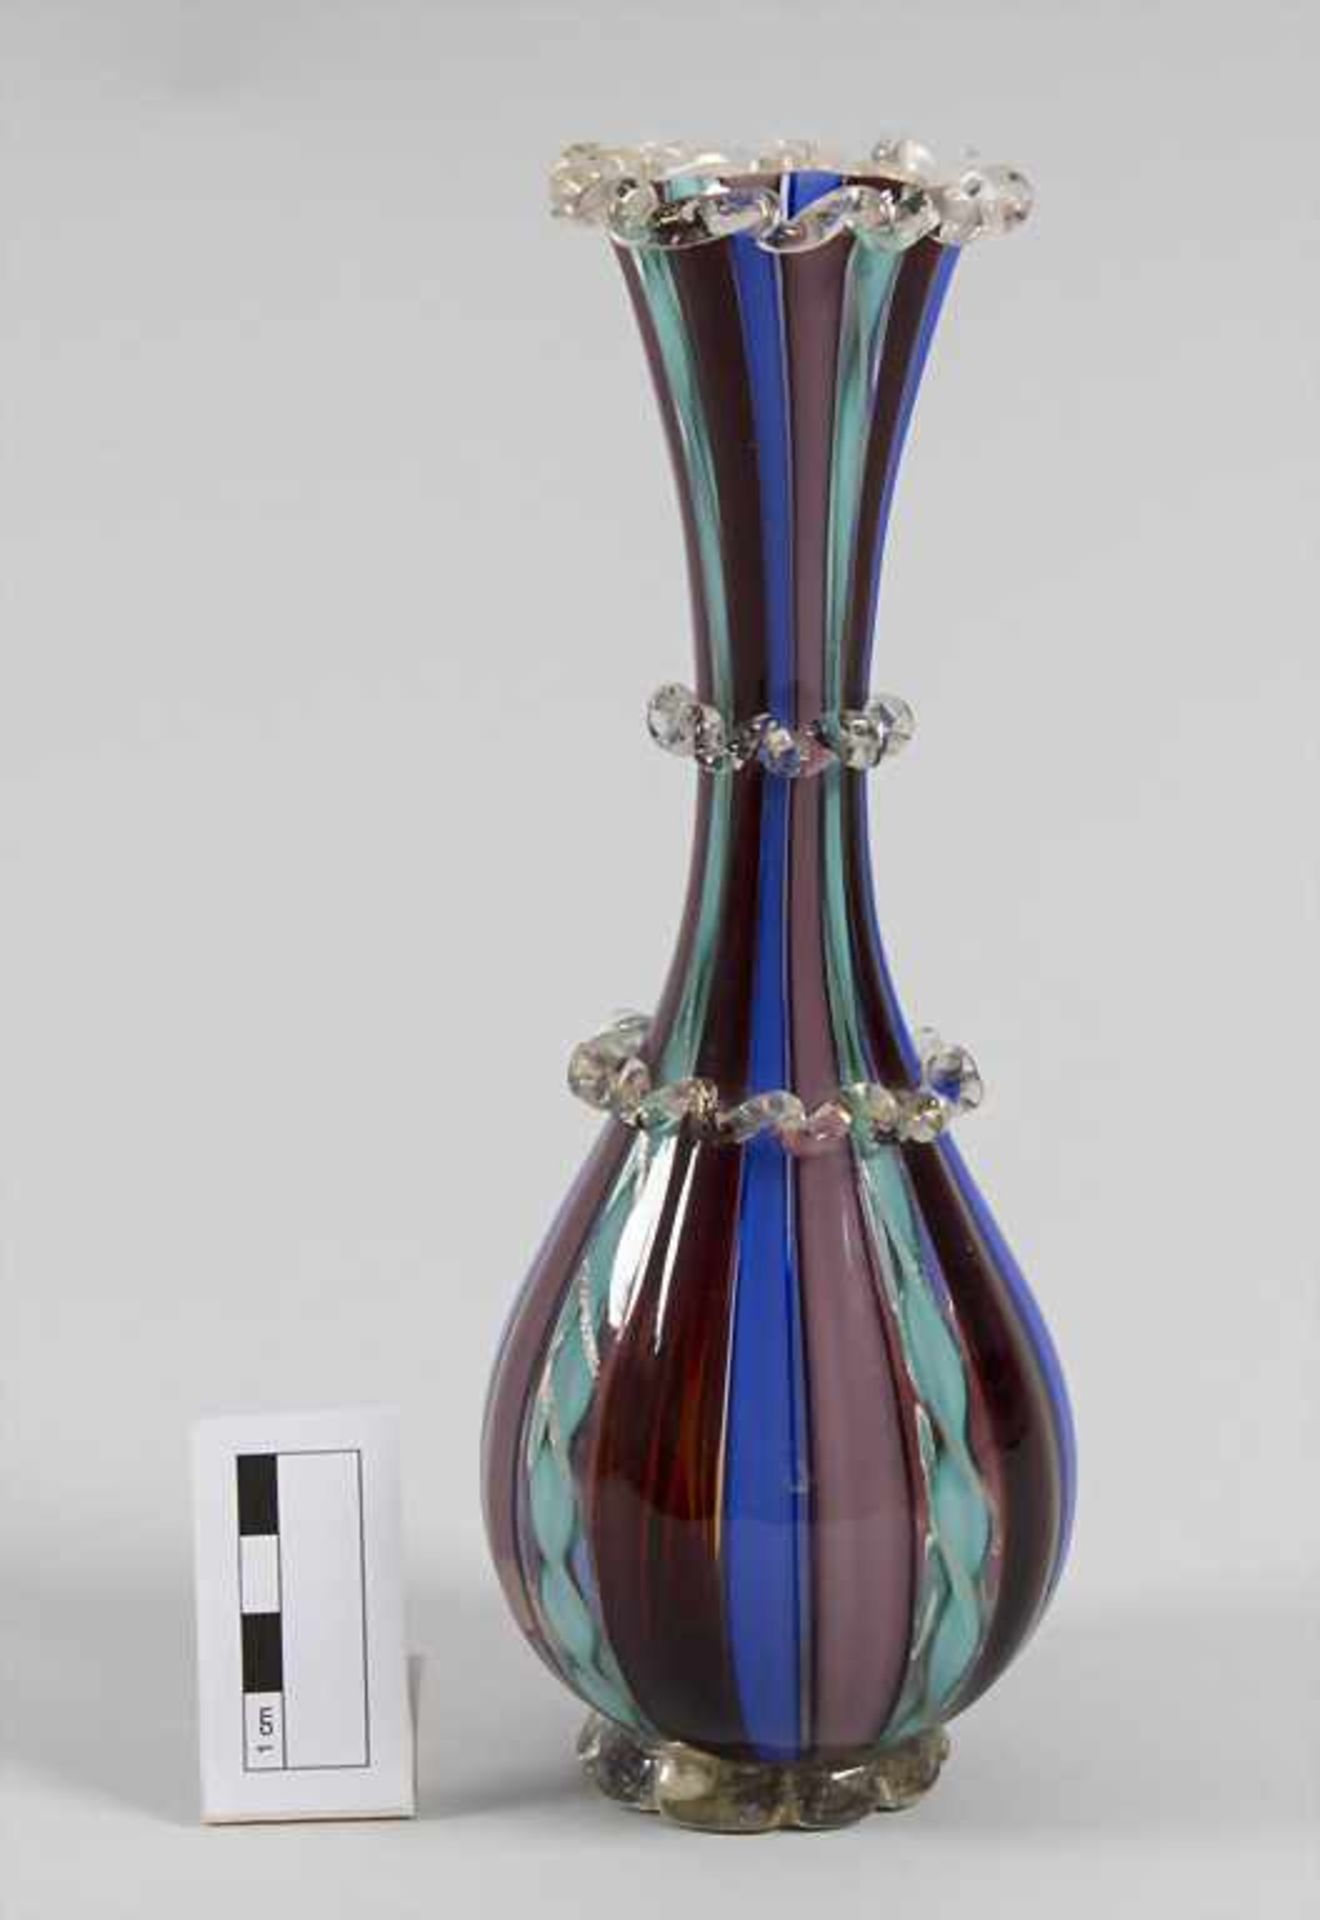 Glasziervase / A decorative vase, Murano, 40/50er Jahre - Image 2 of 5